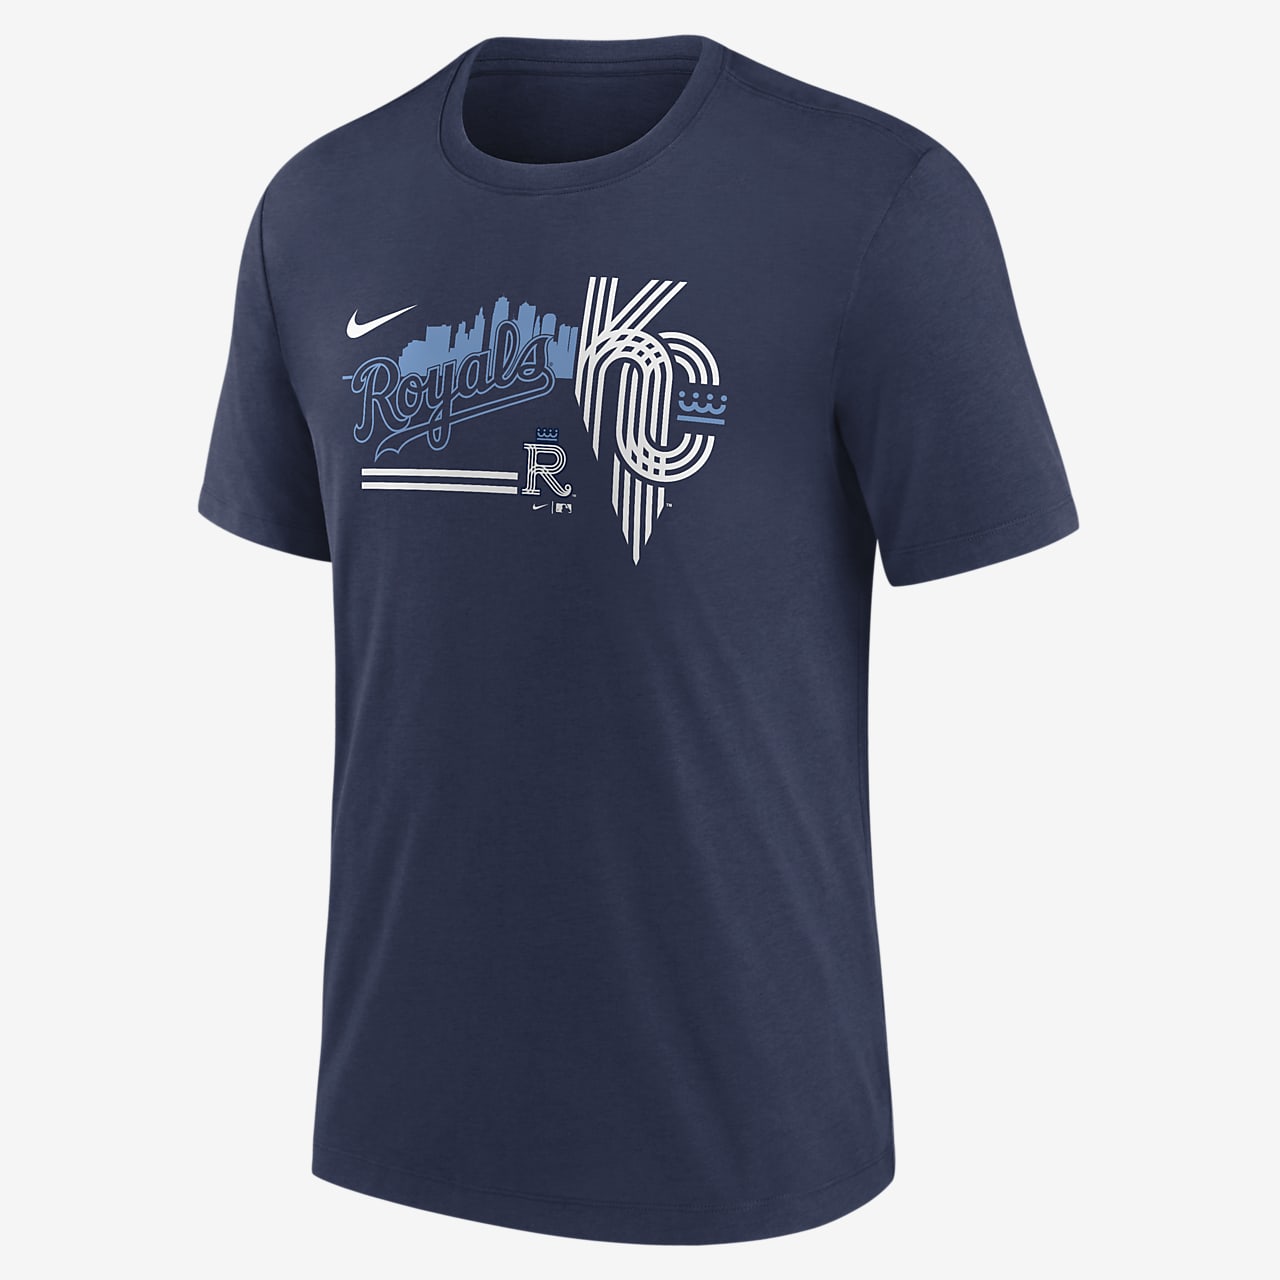 Nike Local (MLB Kansas City Royals) Men's T-Shirt